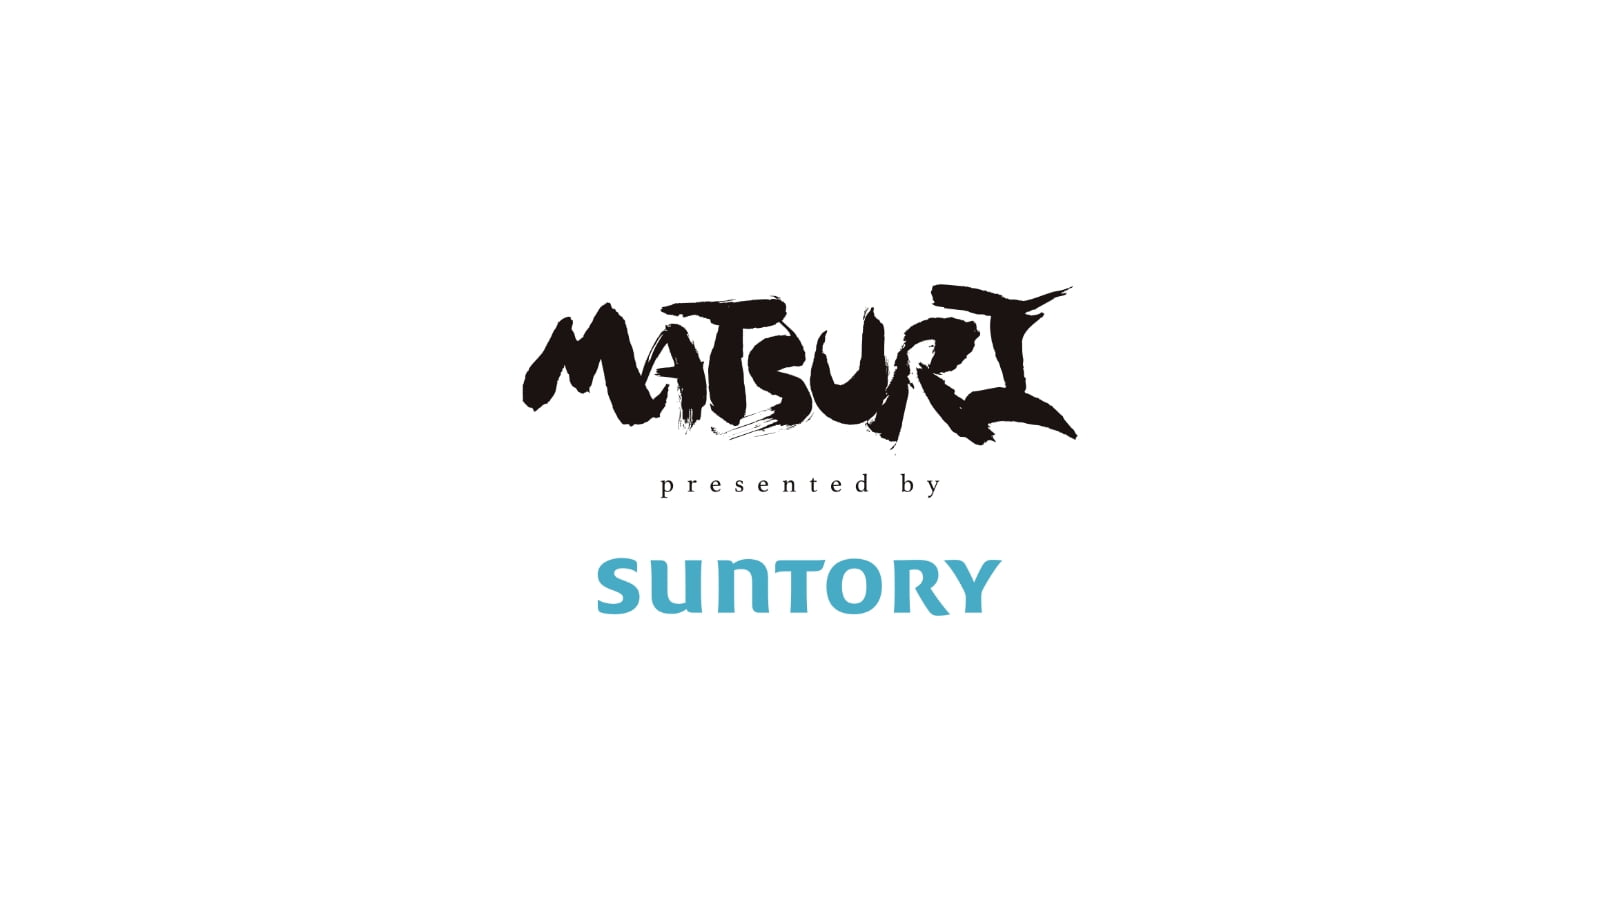 “MATSURI Presented by Suntory” planning